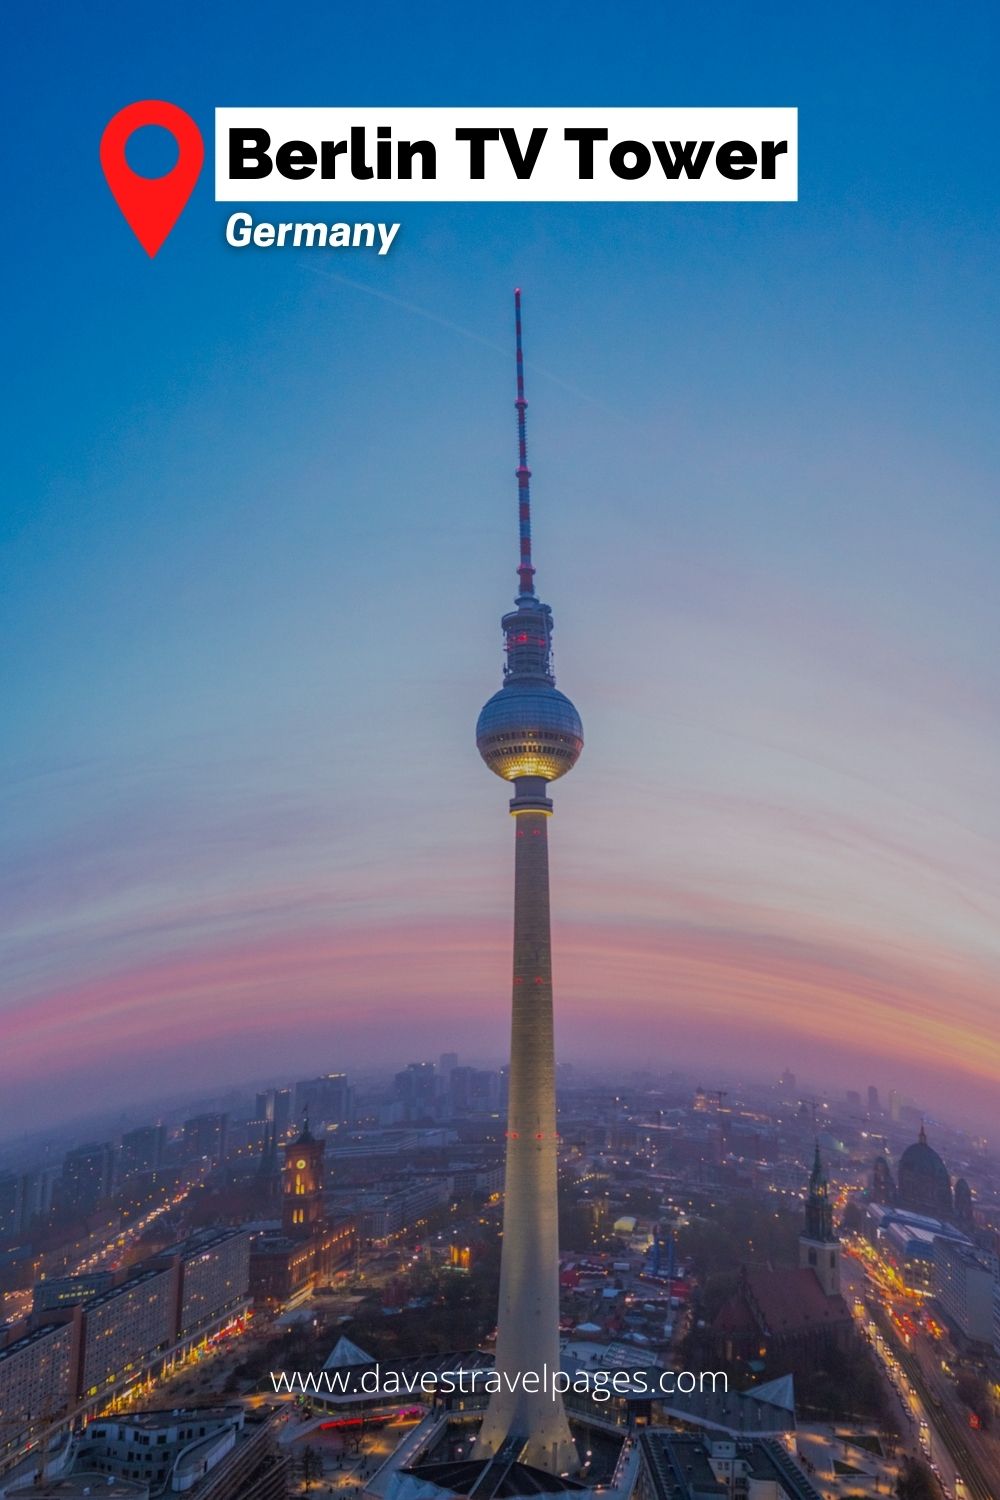 Berlin TV Tower - Germany